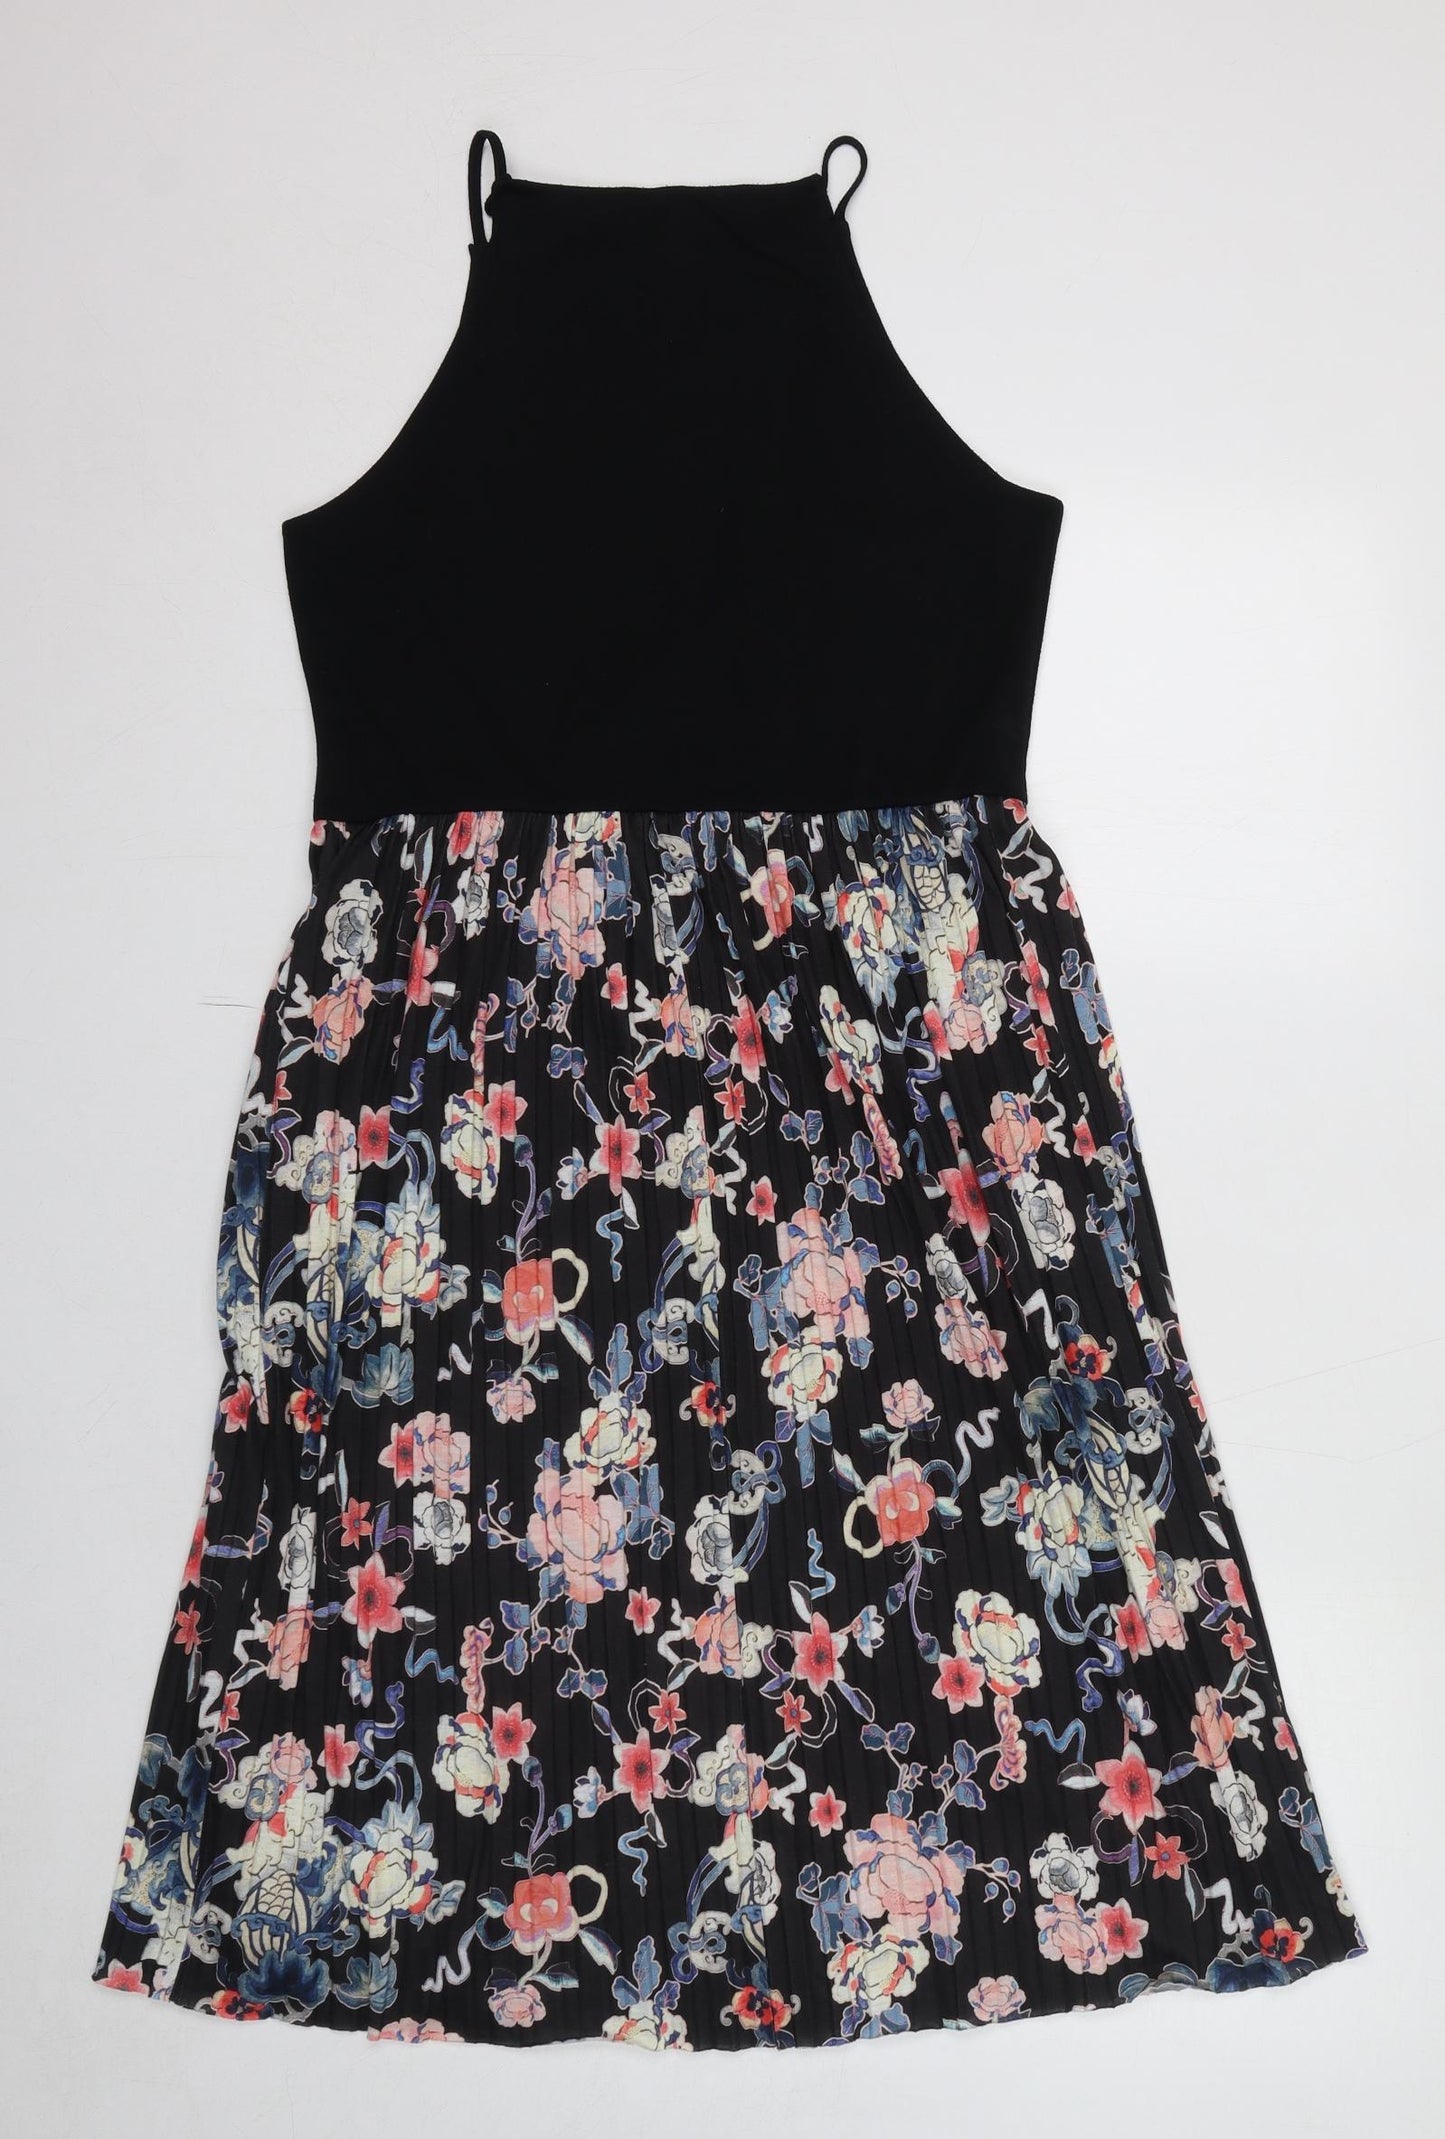 ASOS Womens Black Floral Elastane Slip Dress Size 14 Round Neck Pullover